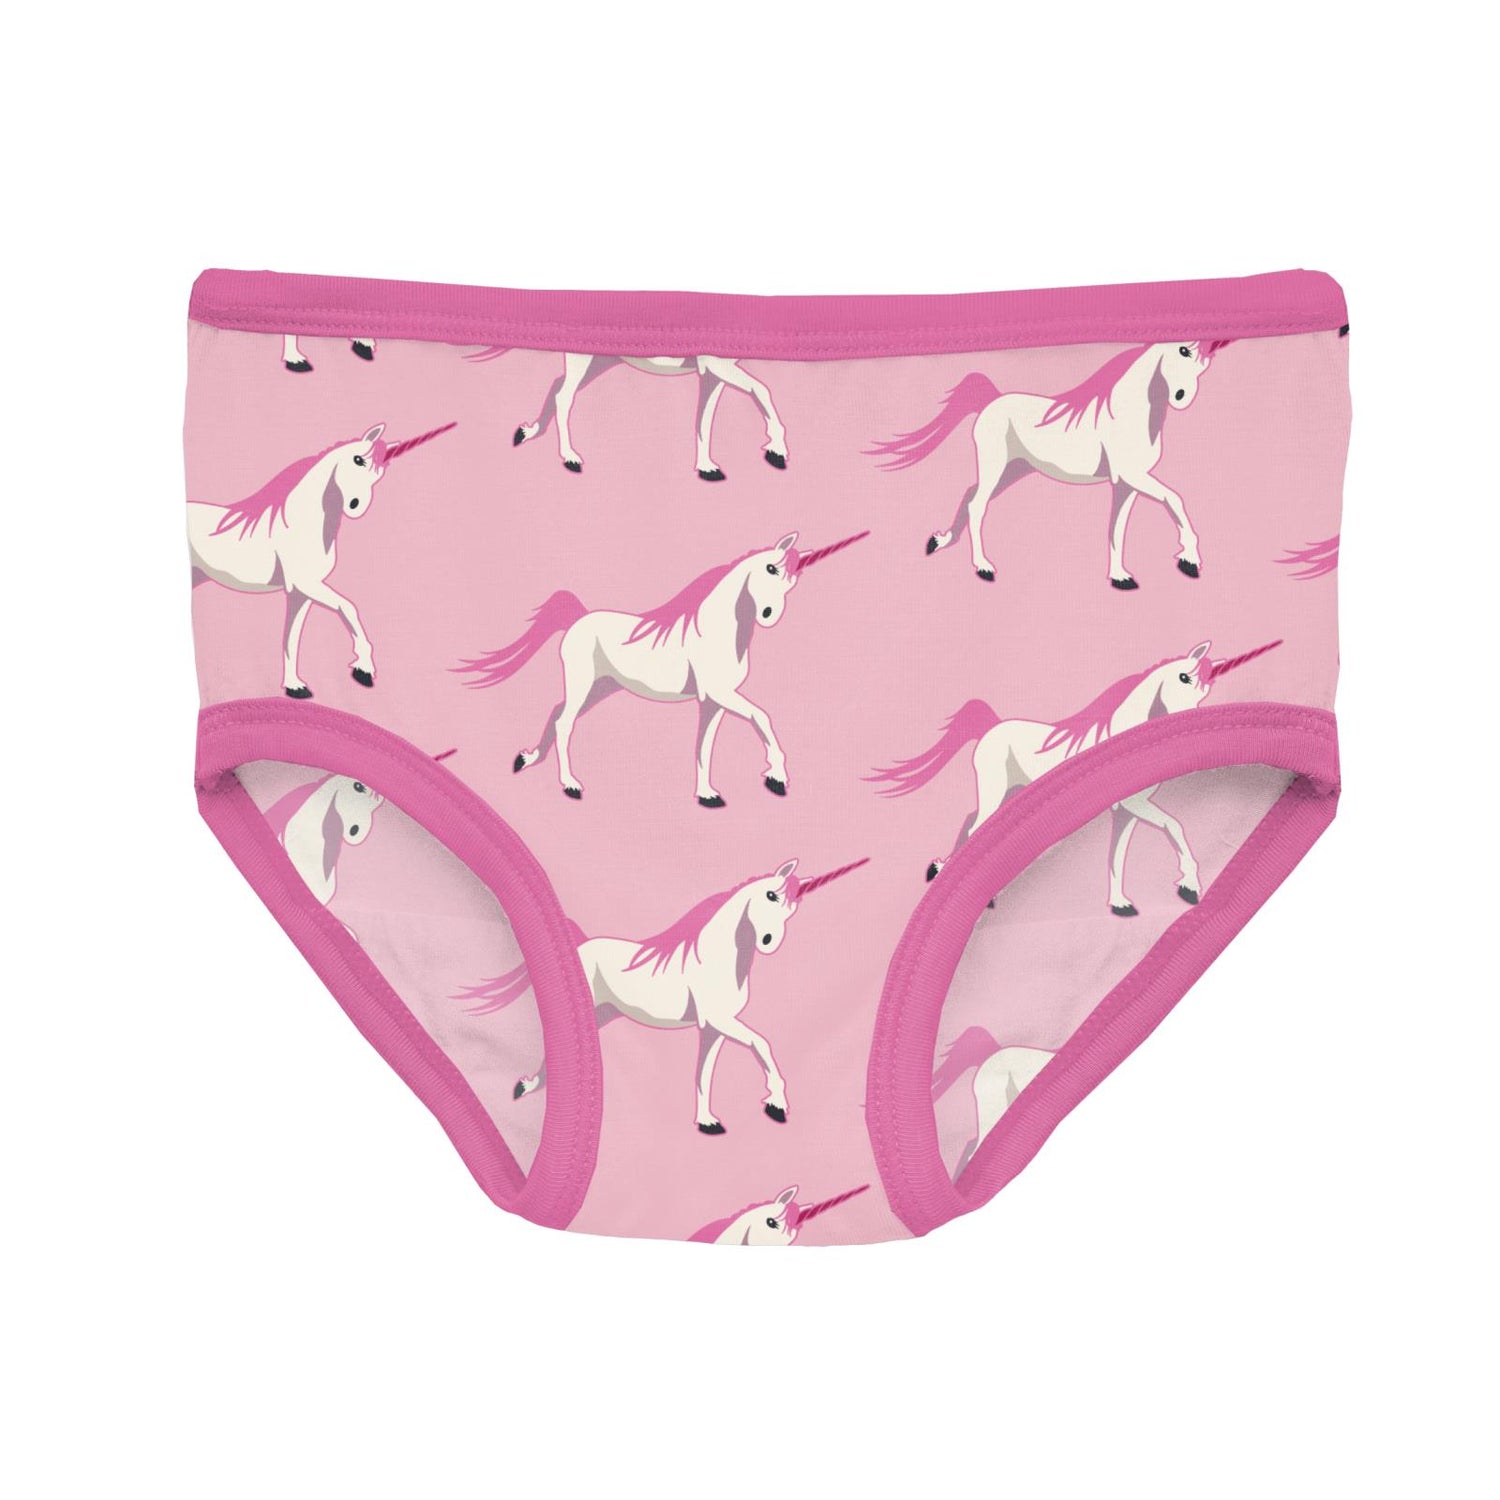 Print Girl's Underwear Set of 3 in Cake Pop Prancing Unicorn, Natural & Latte Wicker